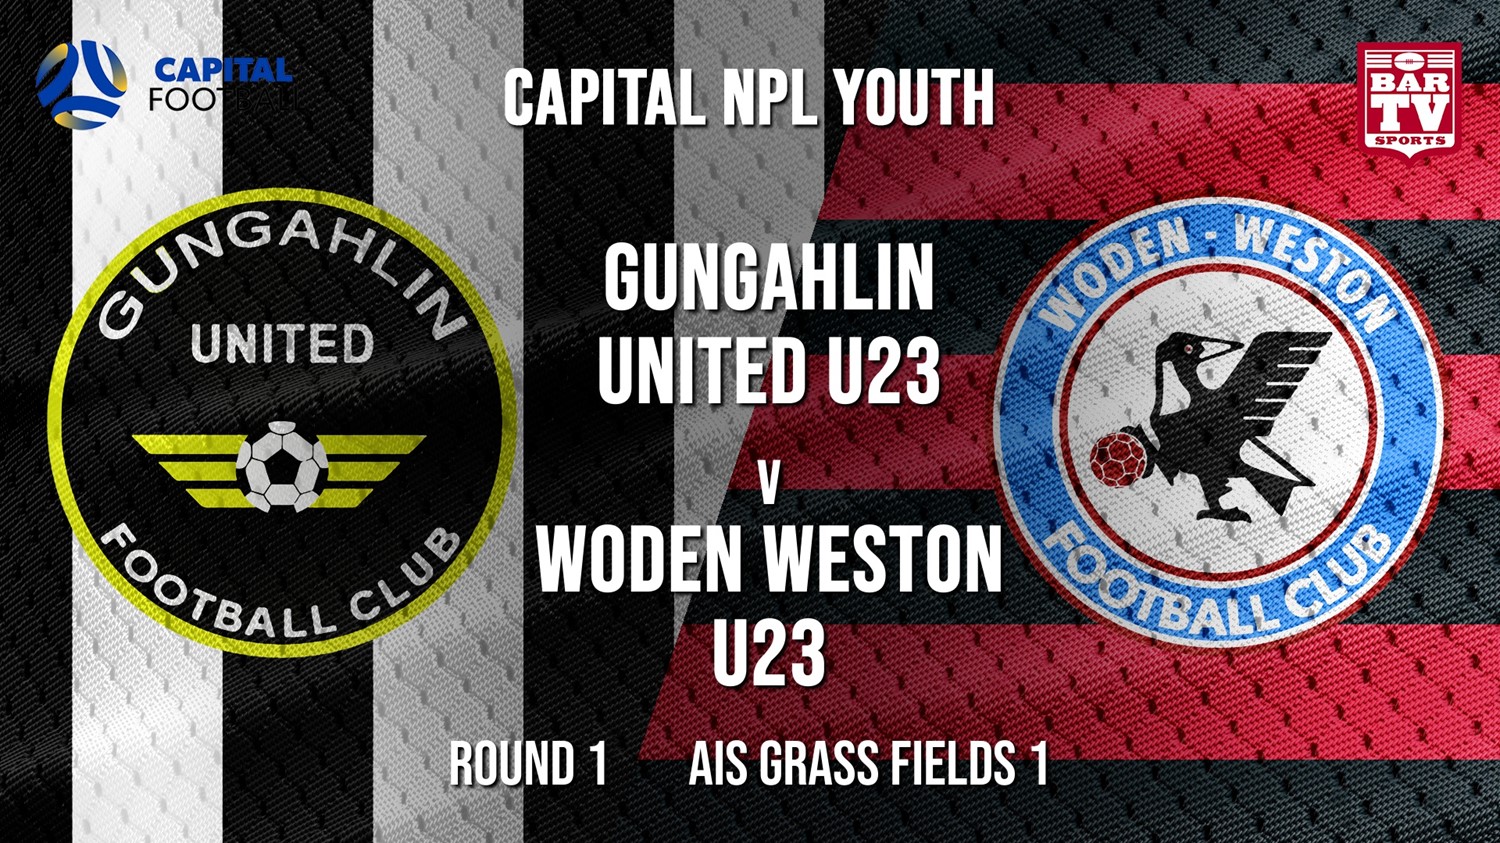 NPL Youth - Capital Round 1 - Gungahlin United U23 v Woden Weston U23 Minigame Slate Image